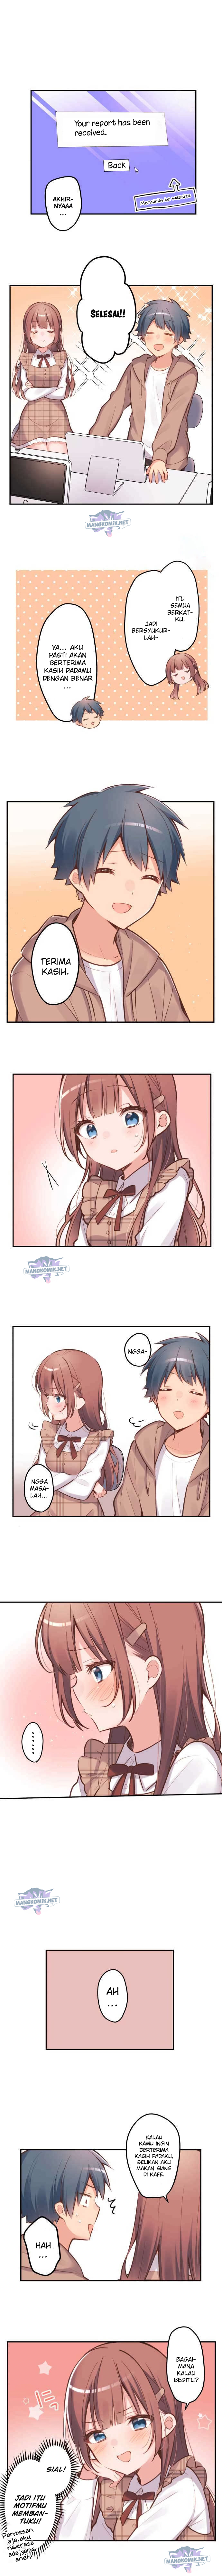 Waka-chan Is Flirty Again Chapter 04 6